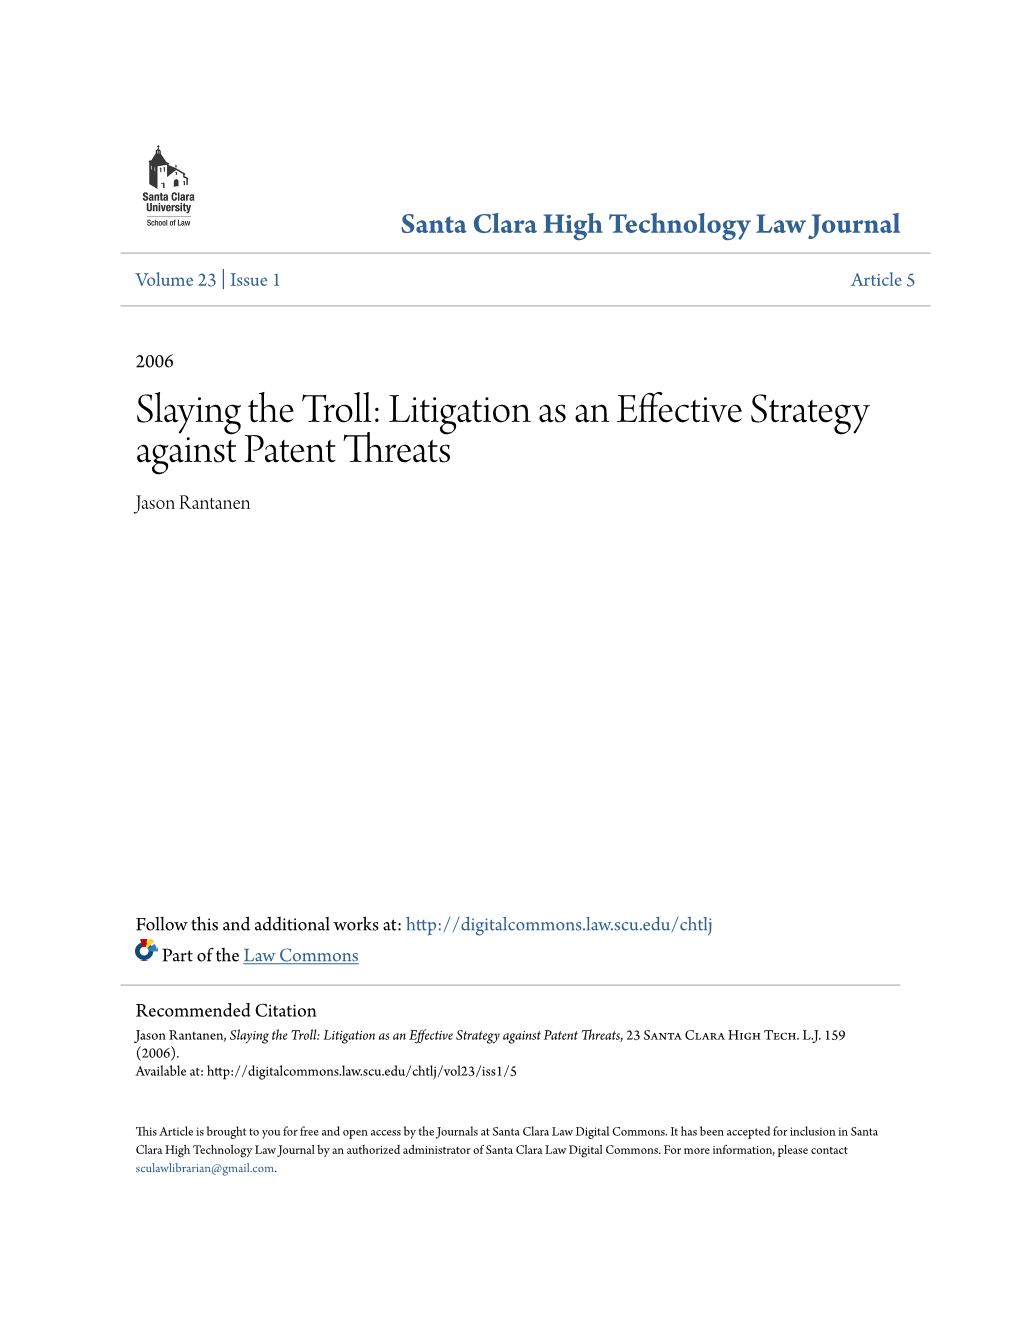 Slaying the Troll: Litigation As an Effective Strategy Against Patent Threats Jason Rantanen